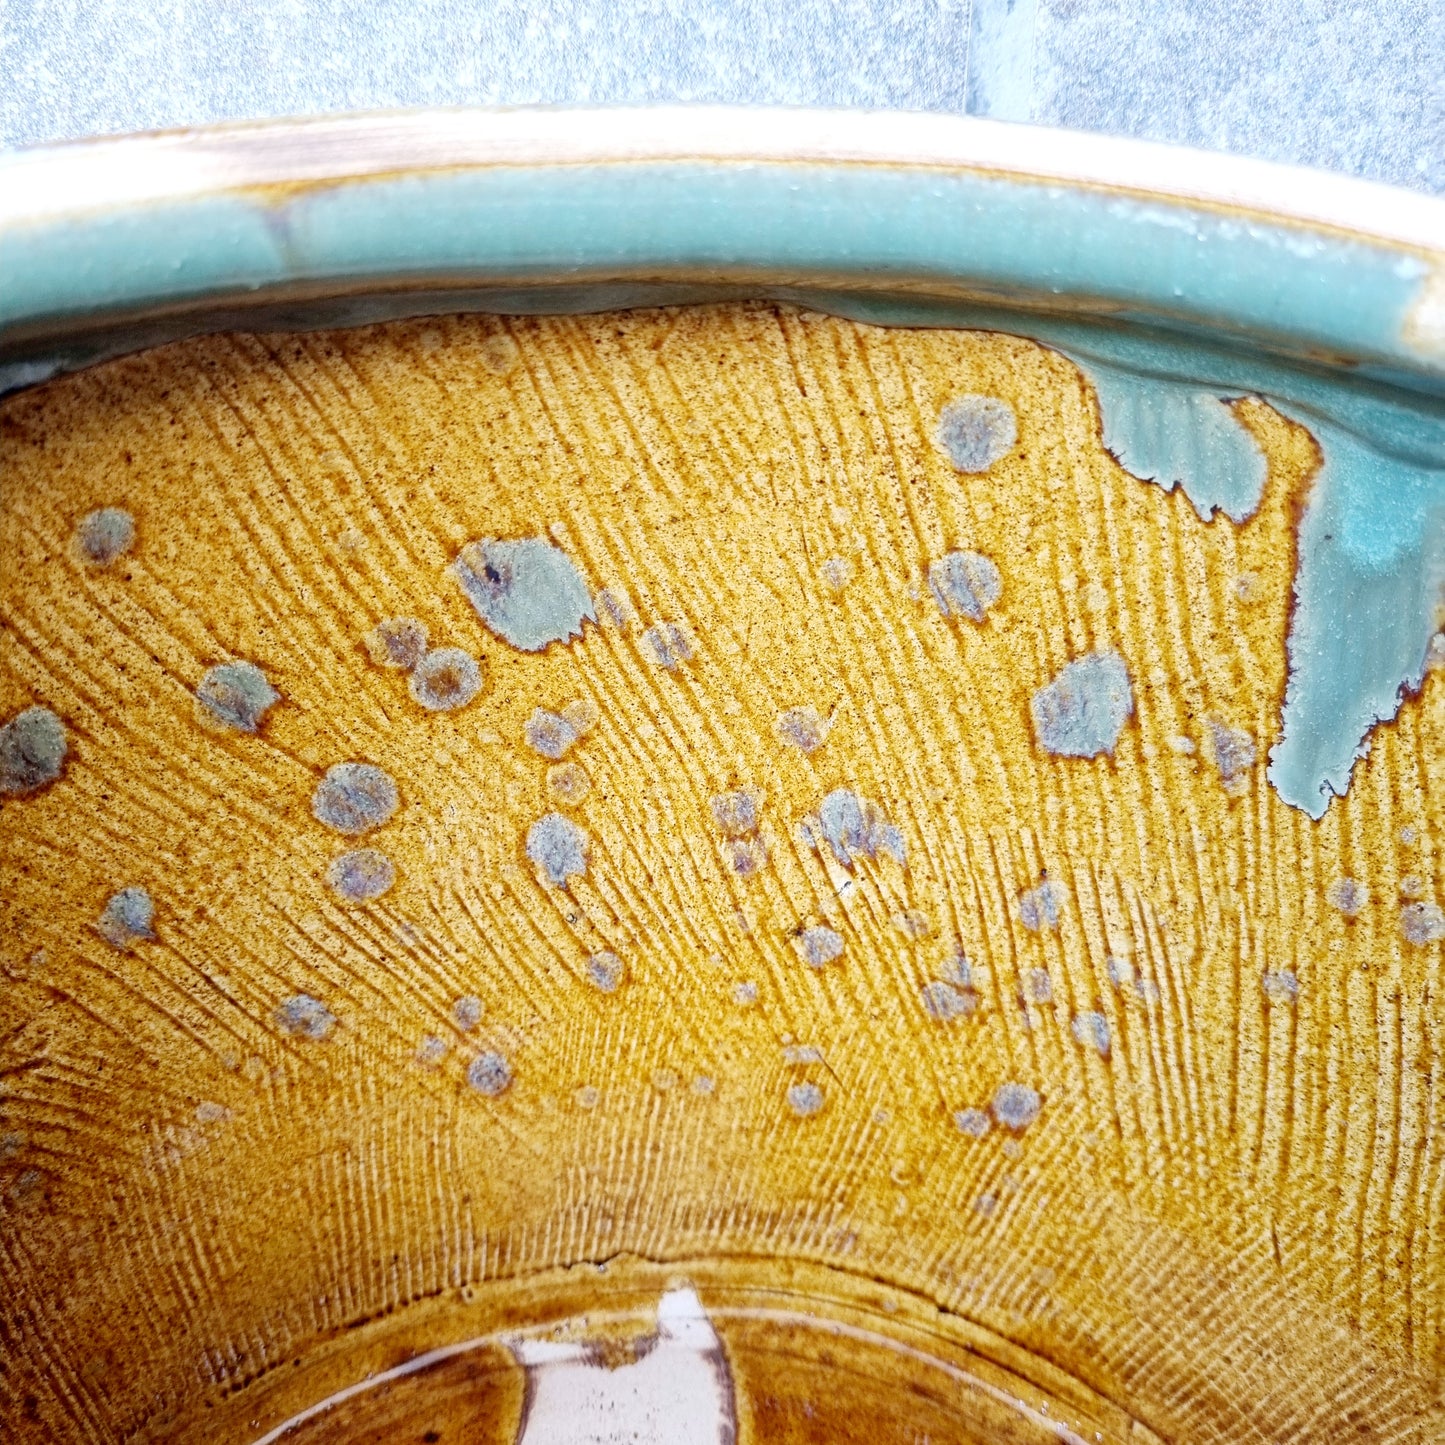 Gran recipiente de cerámica turquesa